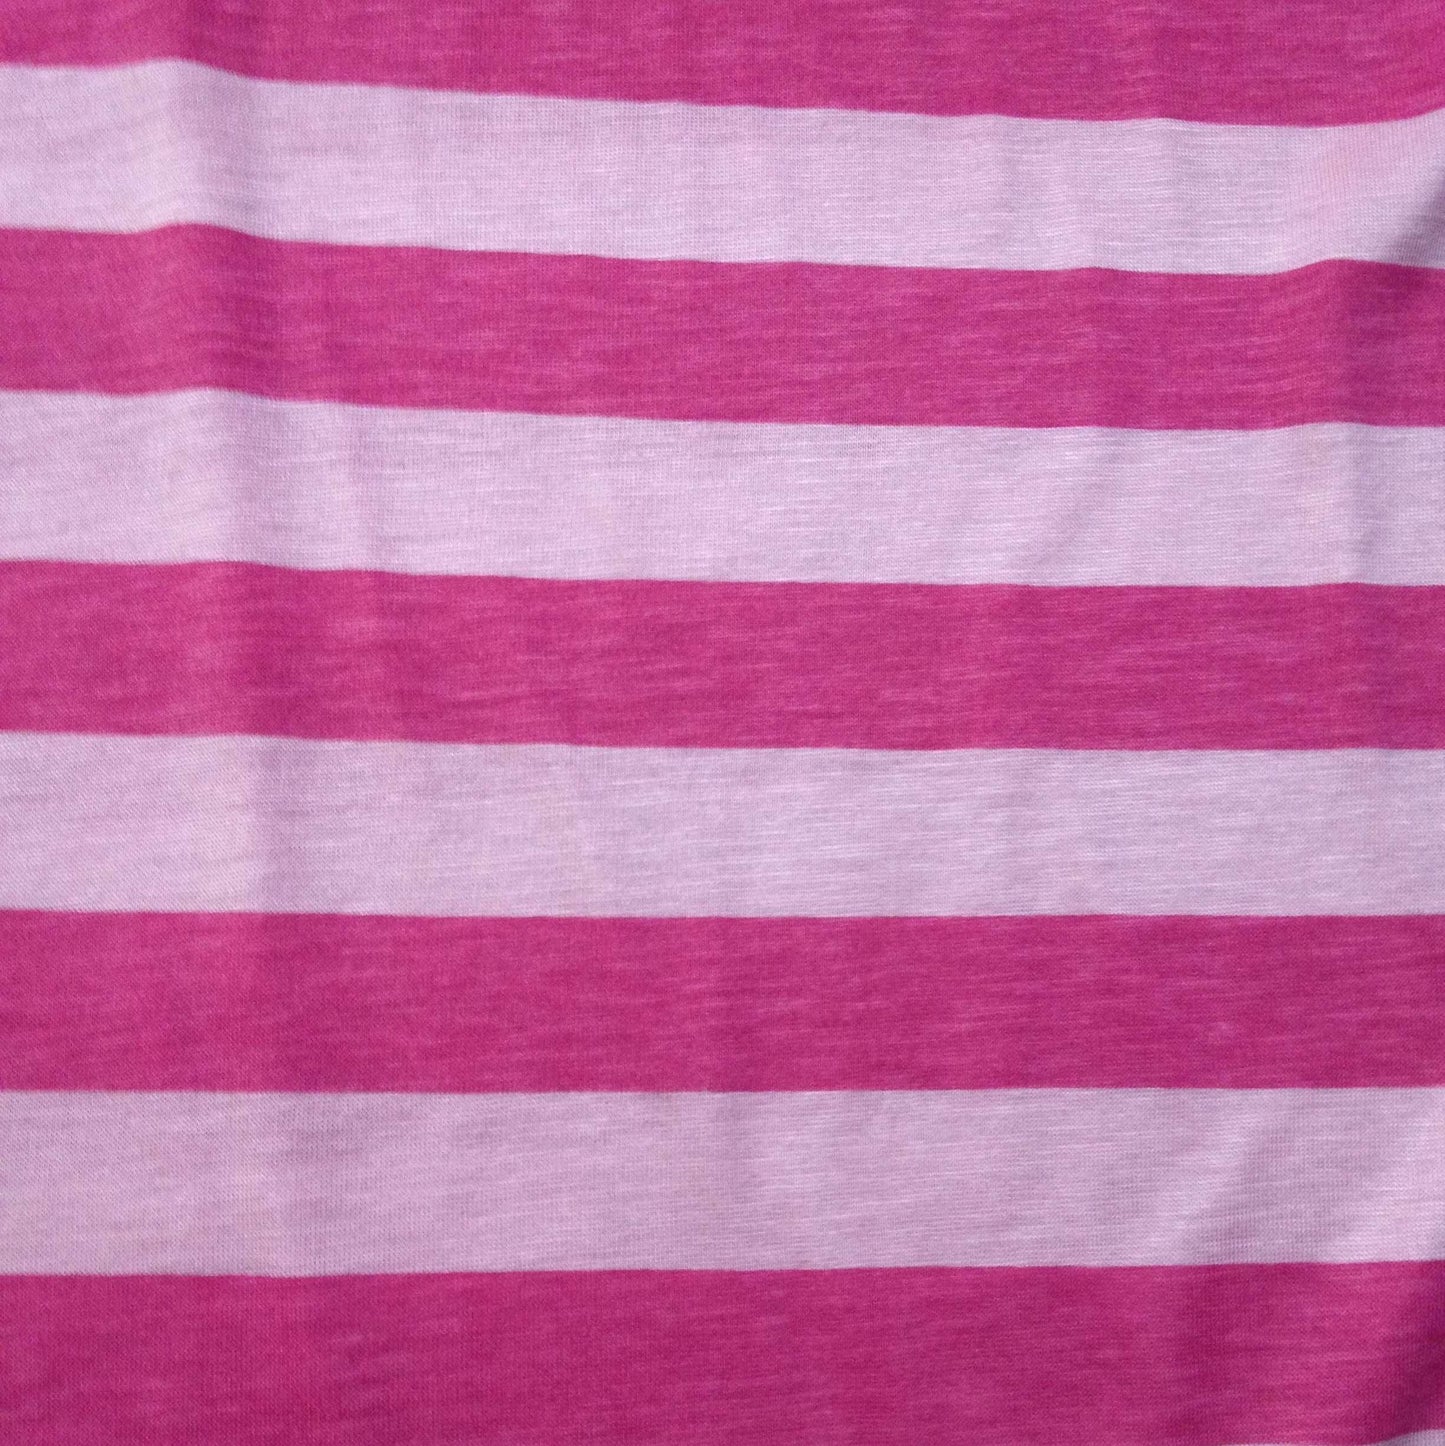 Hot Pink 1" Stripe on Pink Cotton Jersey